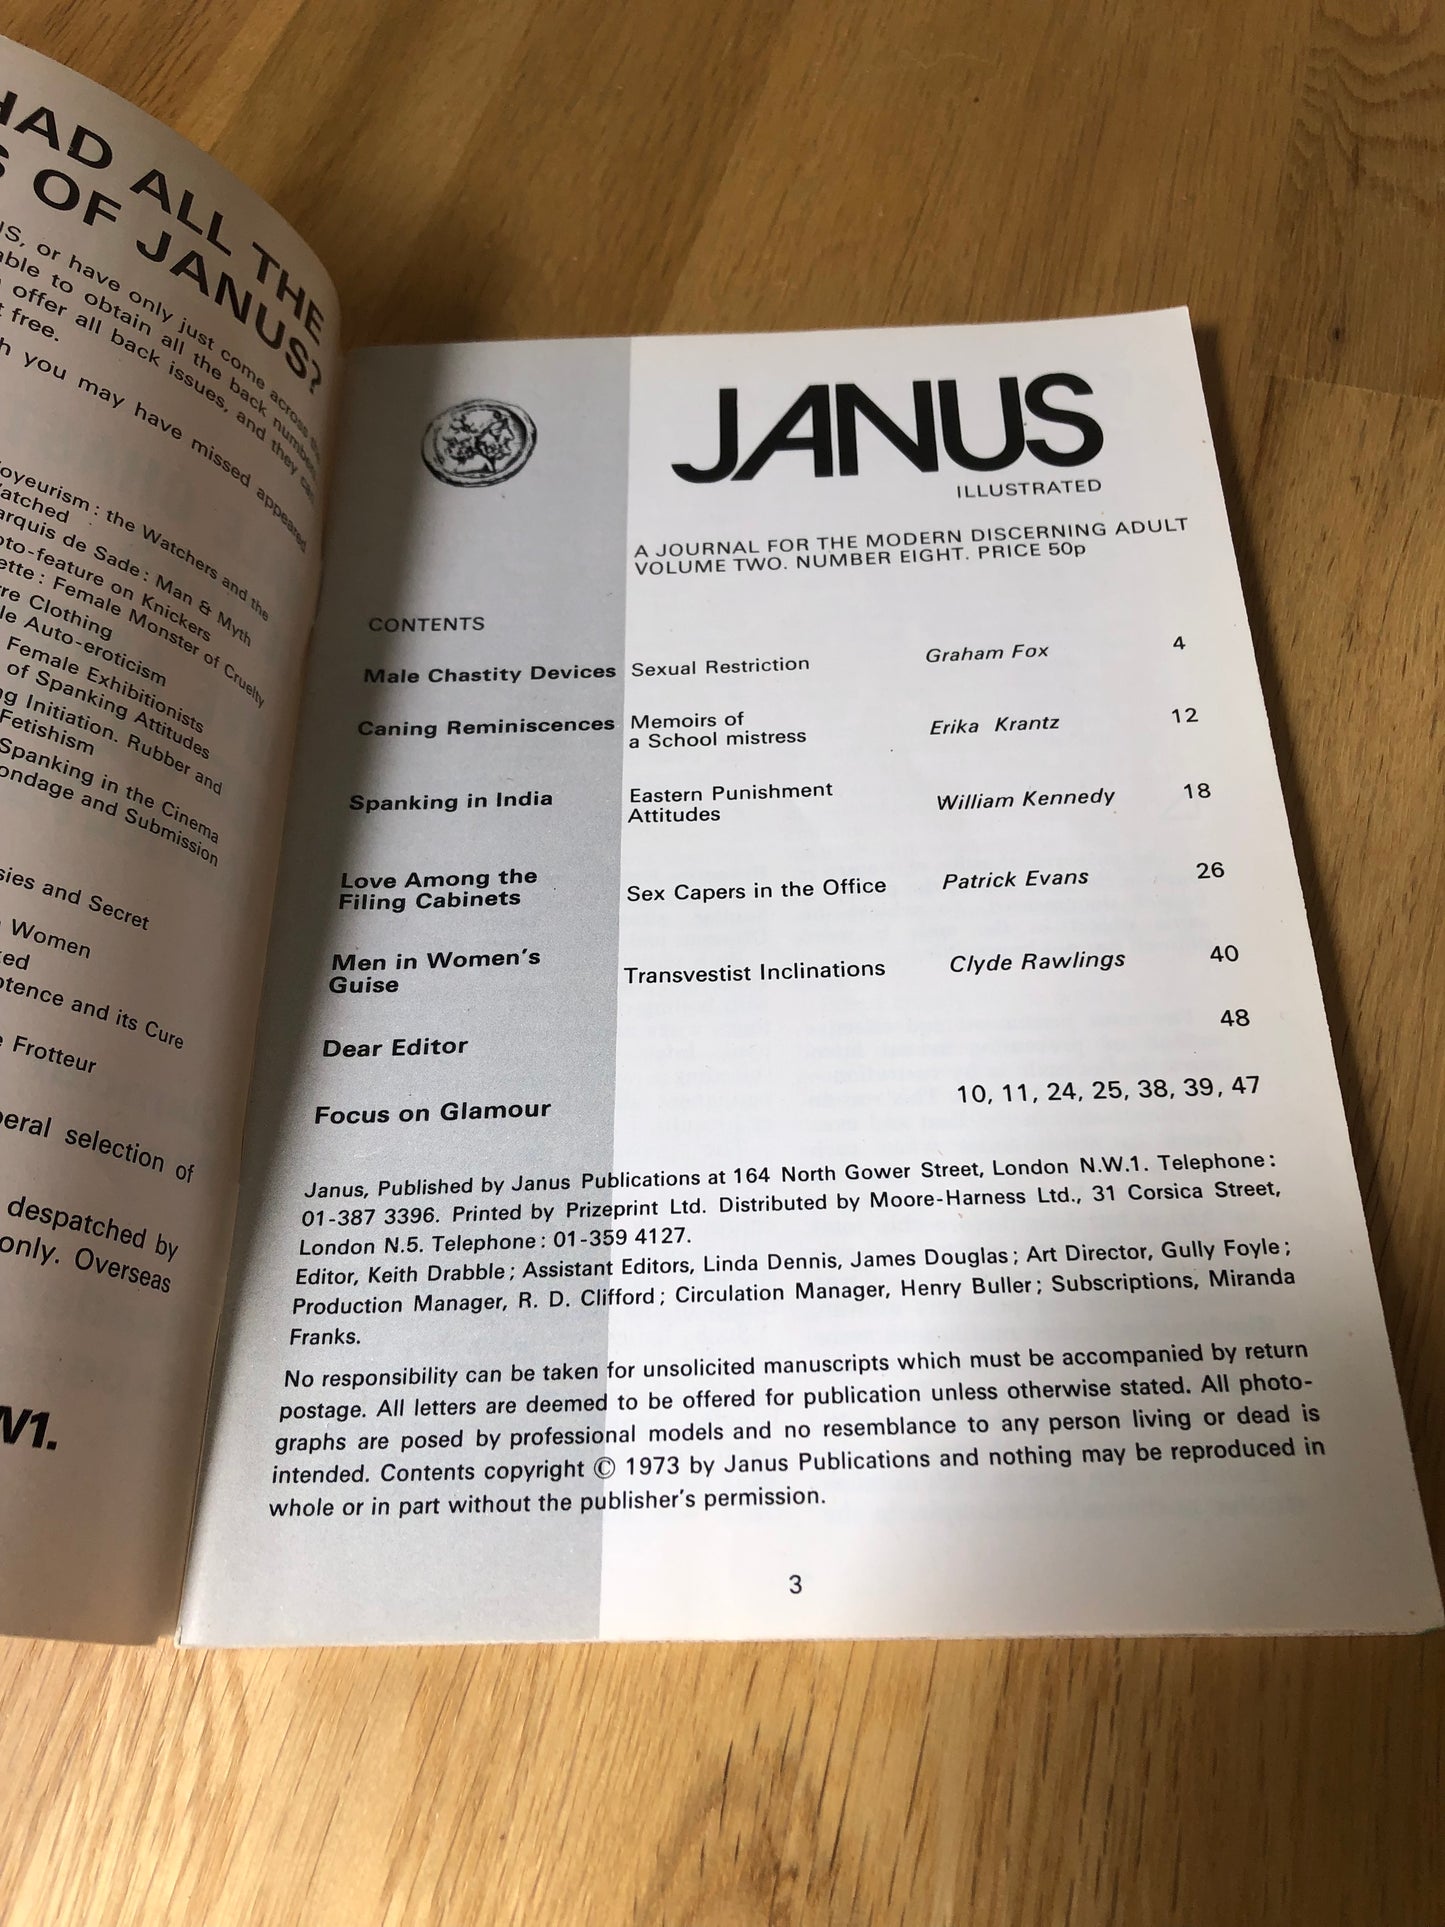 Janus Magazine Vol 2 No 8